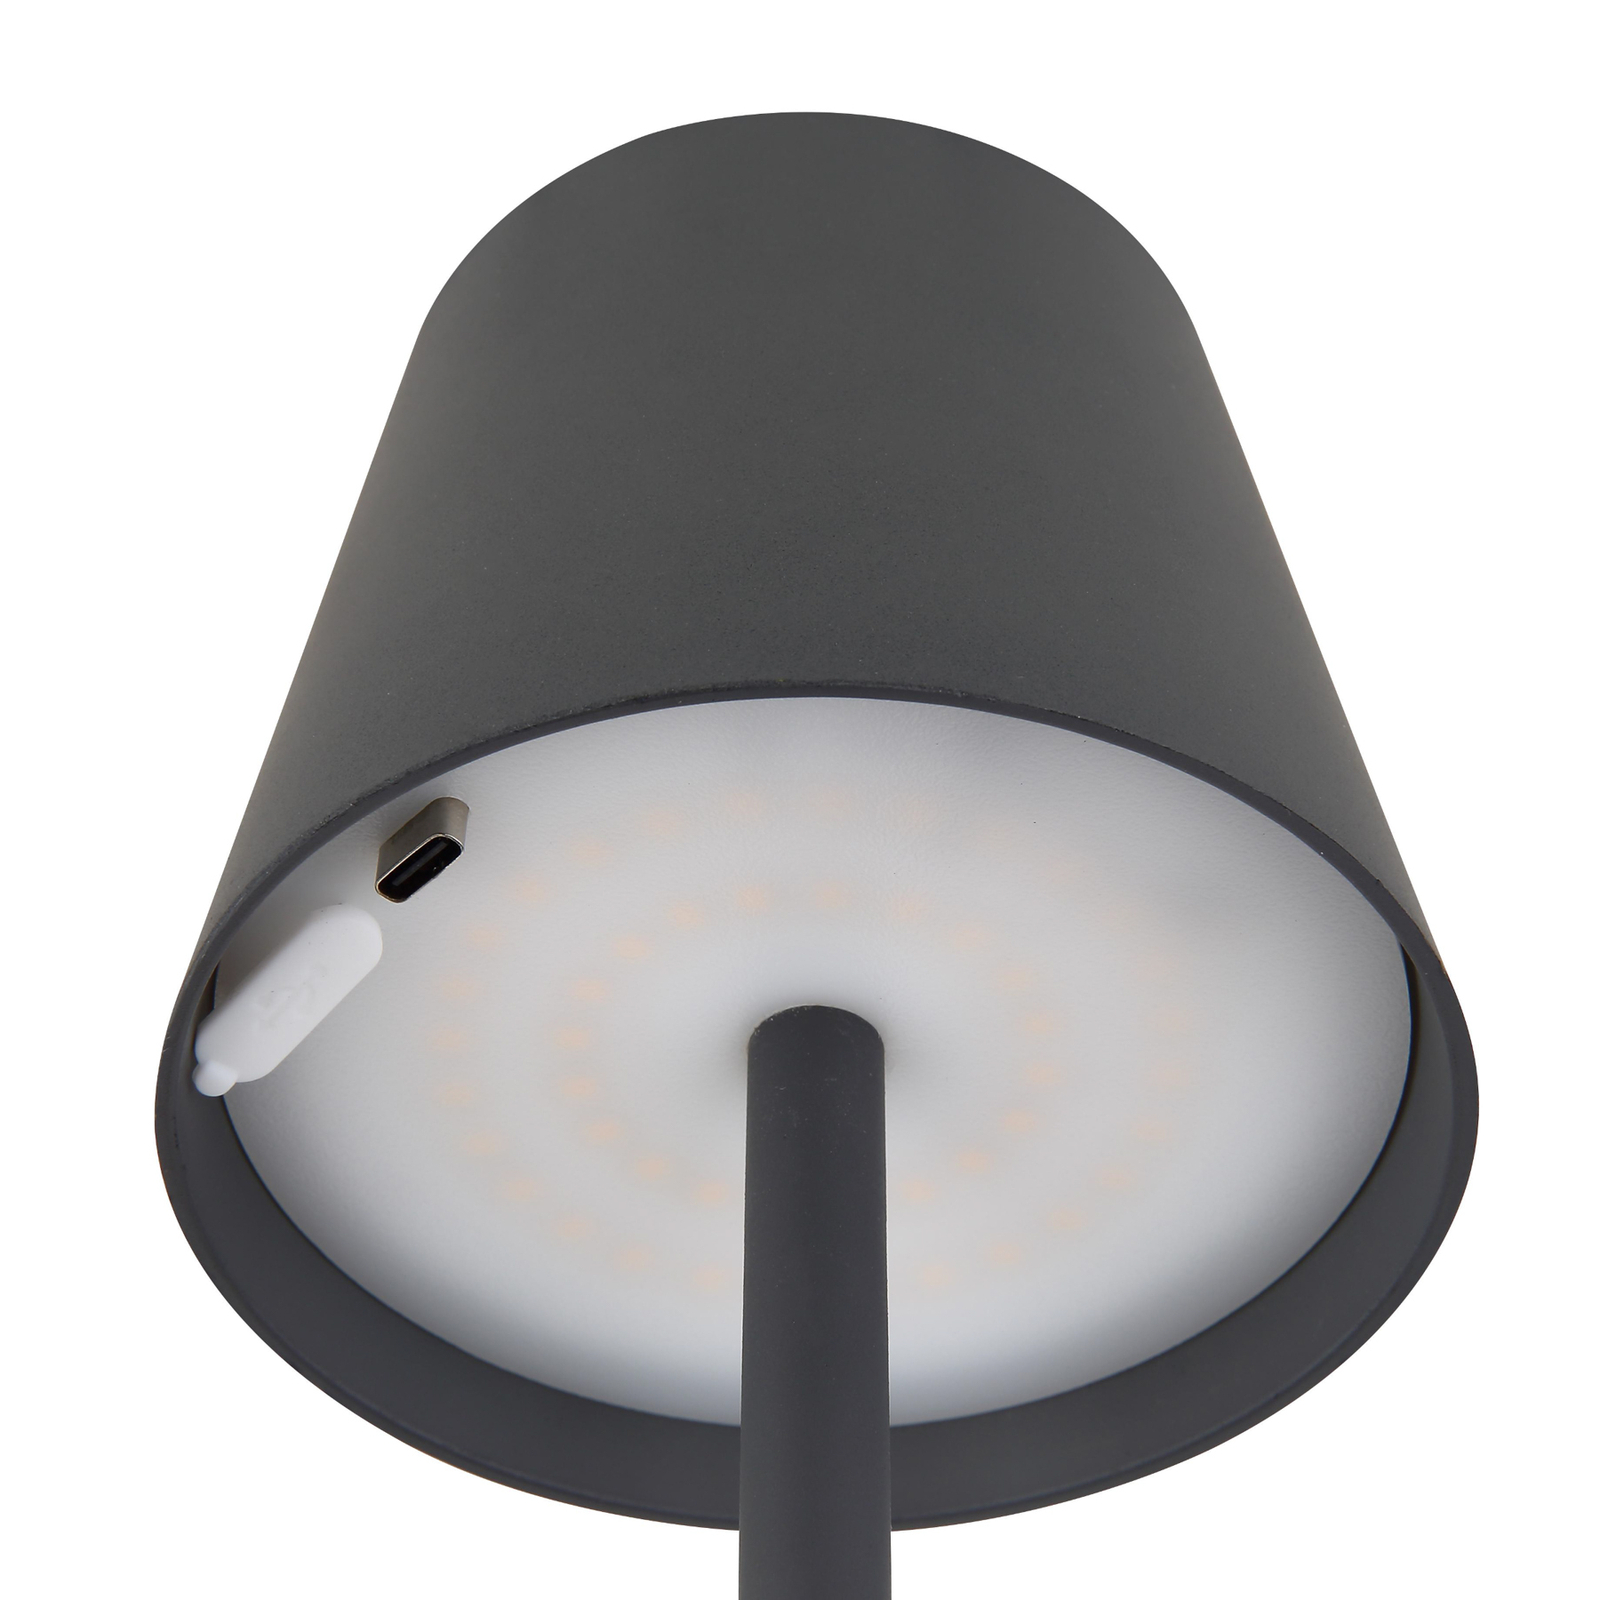 LED tafellamp Vannie, zwart, hoogte 36 cm, CCT